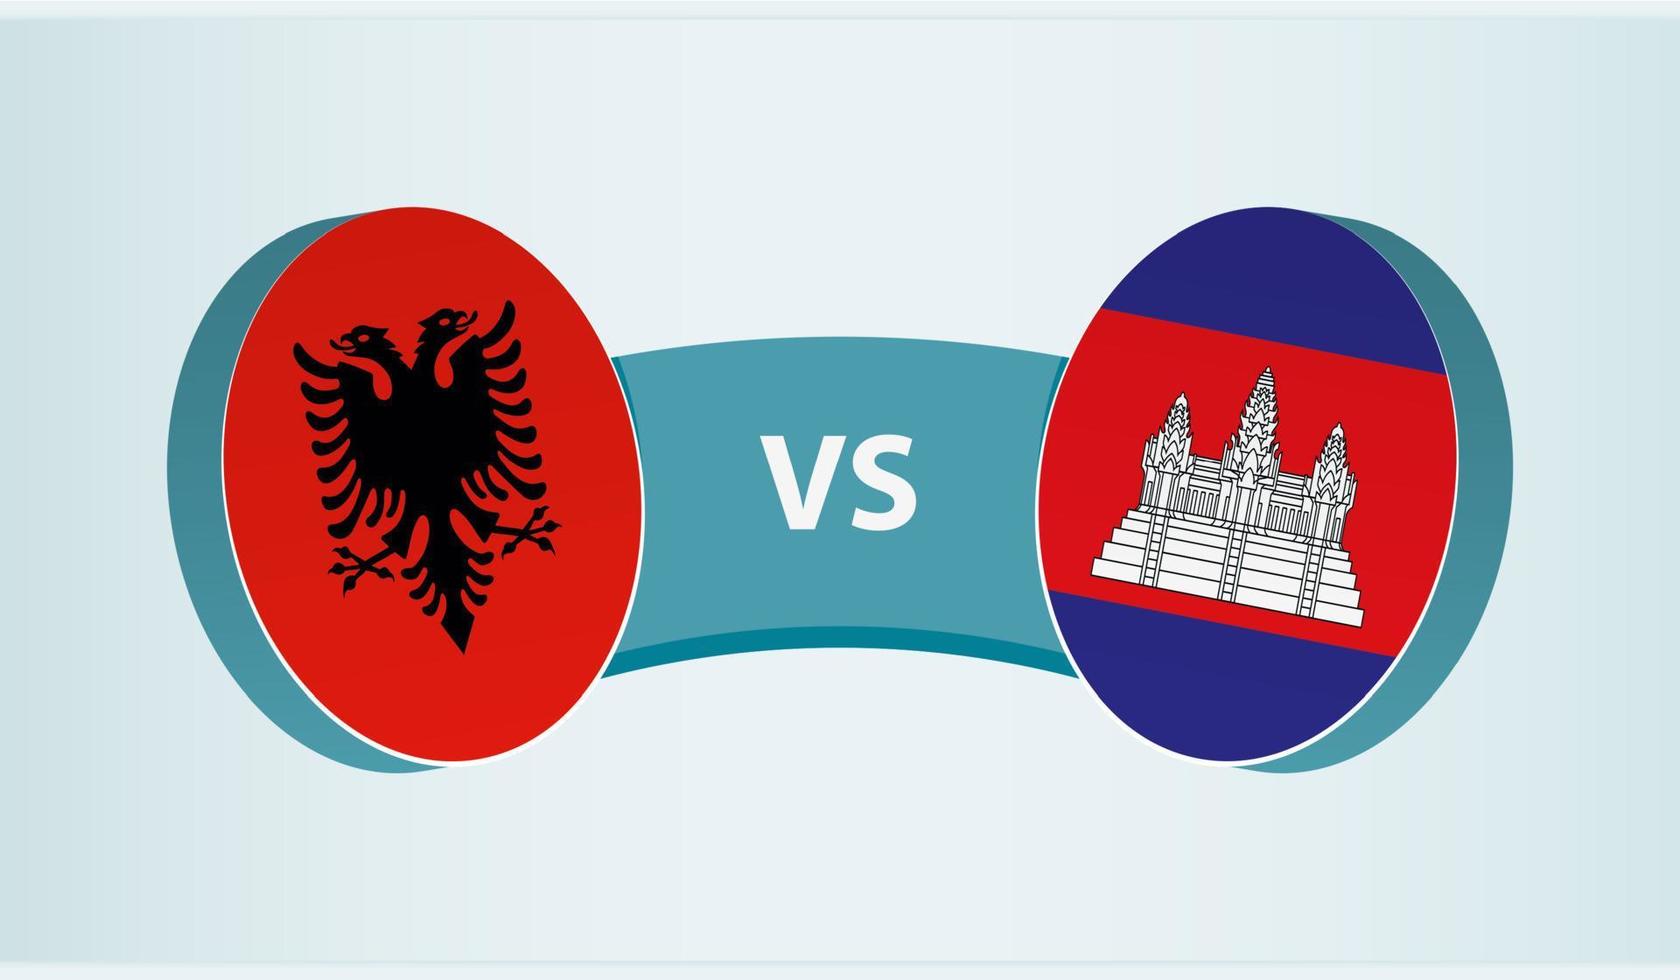 Albania versus Cambodia, team sports competition concept. vector